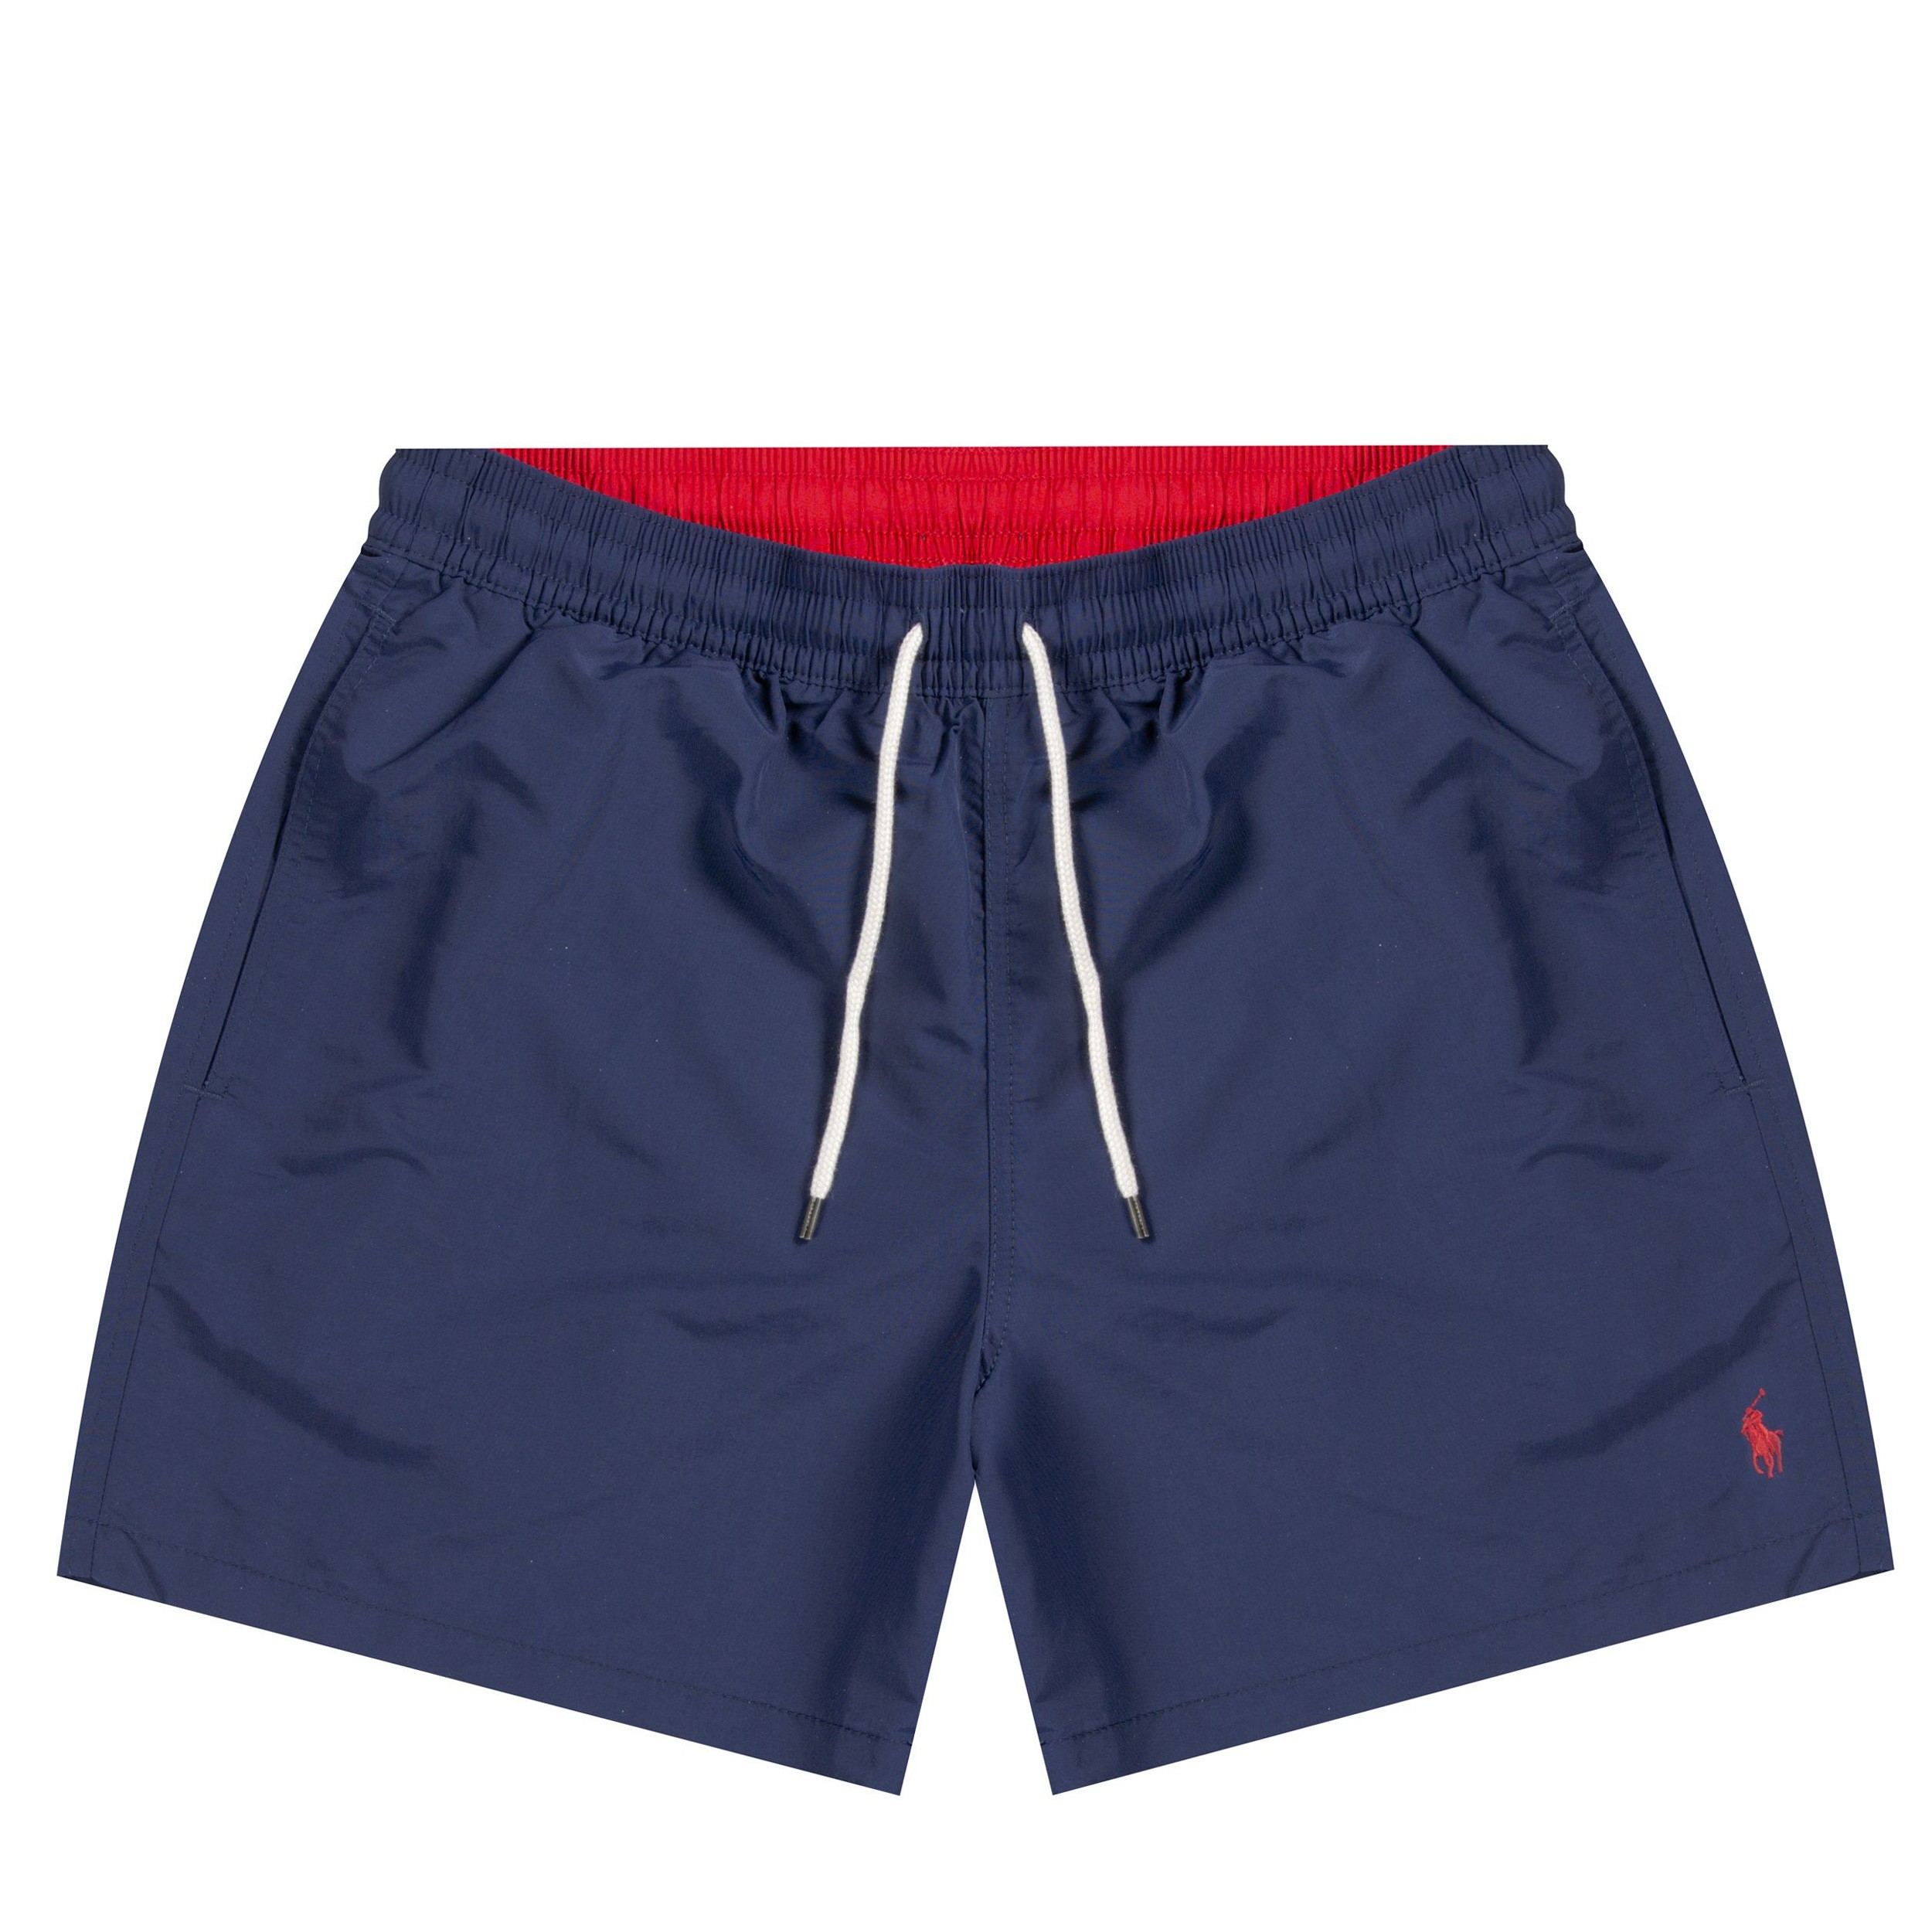 Polo Ralph Lauren 'Classic' Swim Shorts Navy/Red